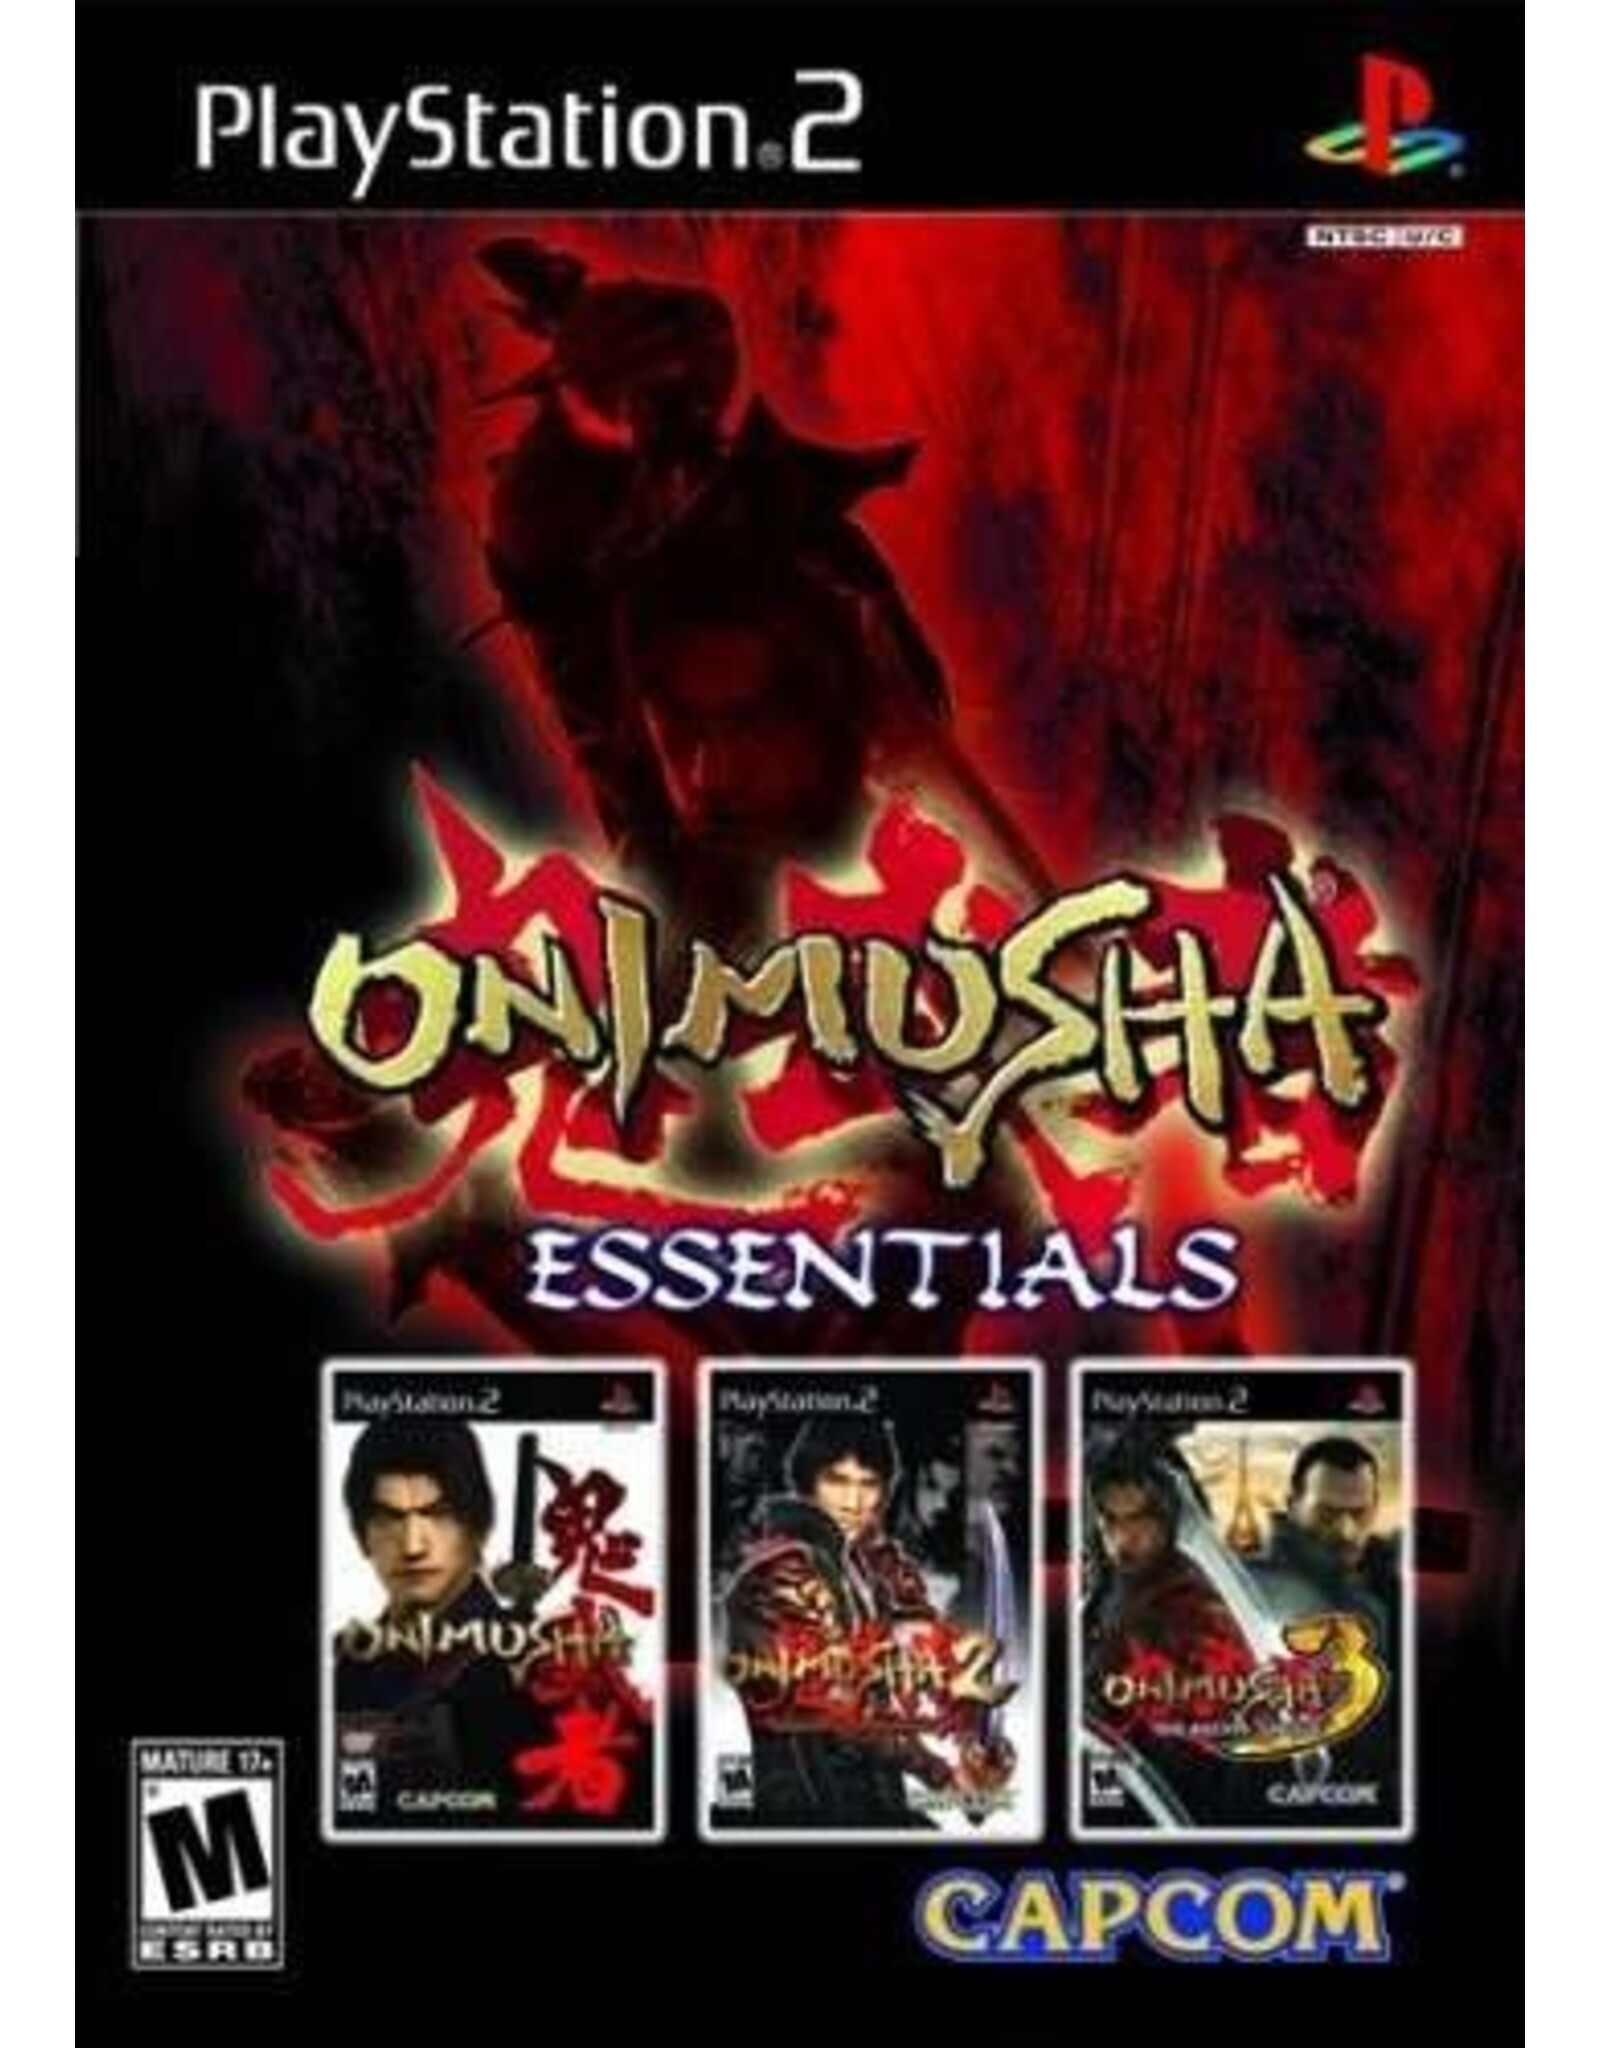 Playstation 2 Onimusha Essentials (Brand New, Heavily Damaged Outer Shrinkwrap)